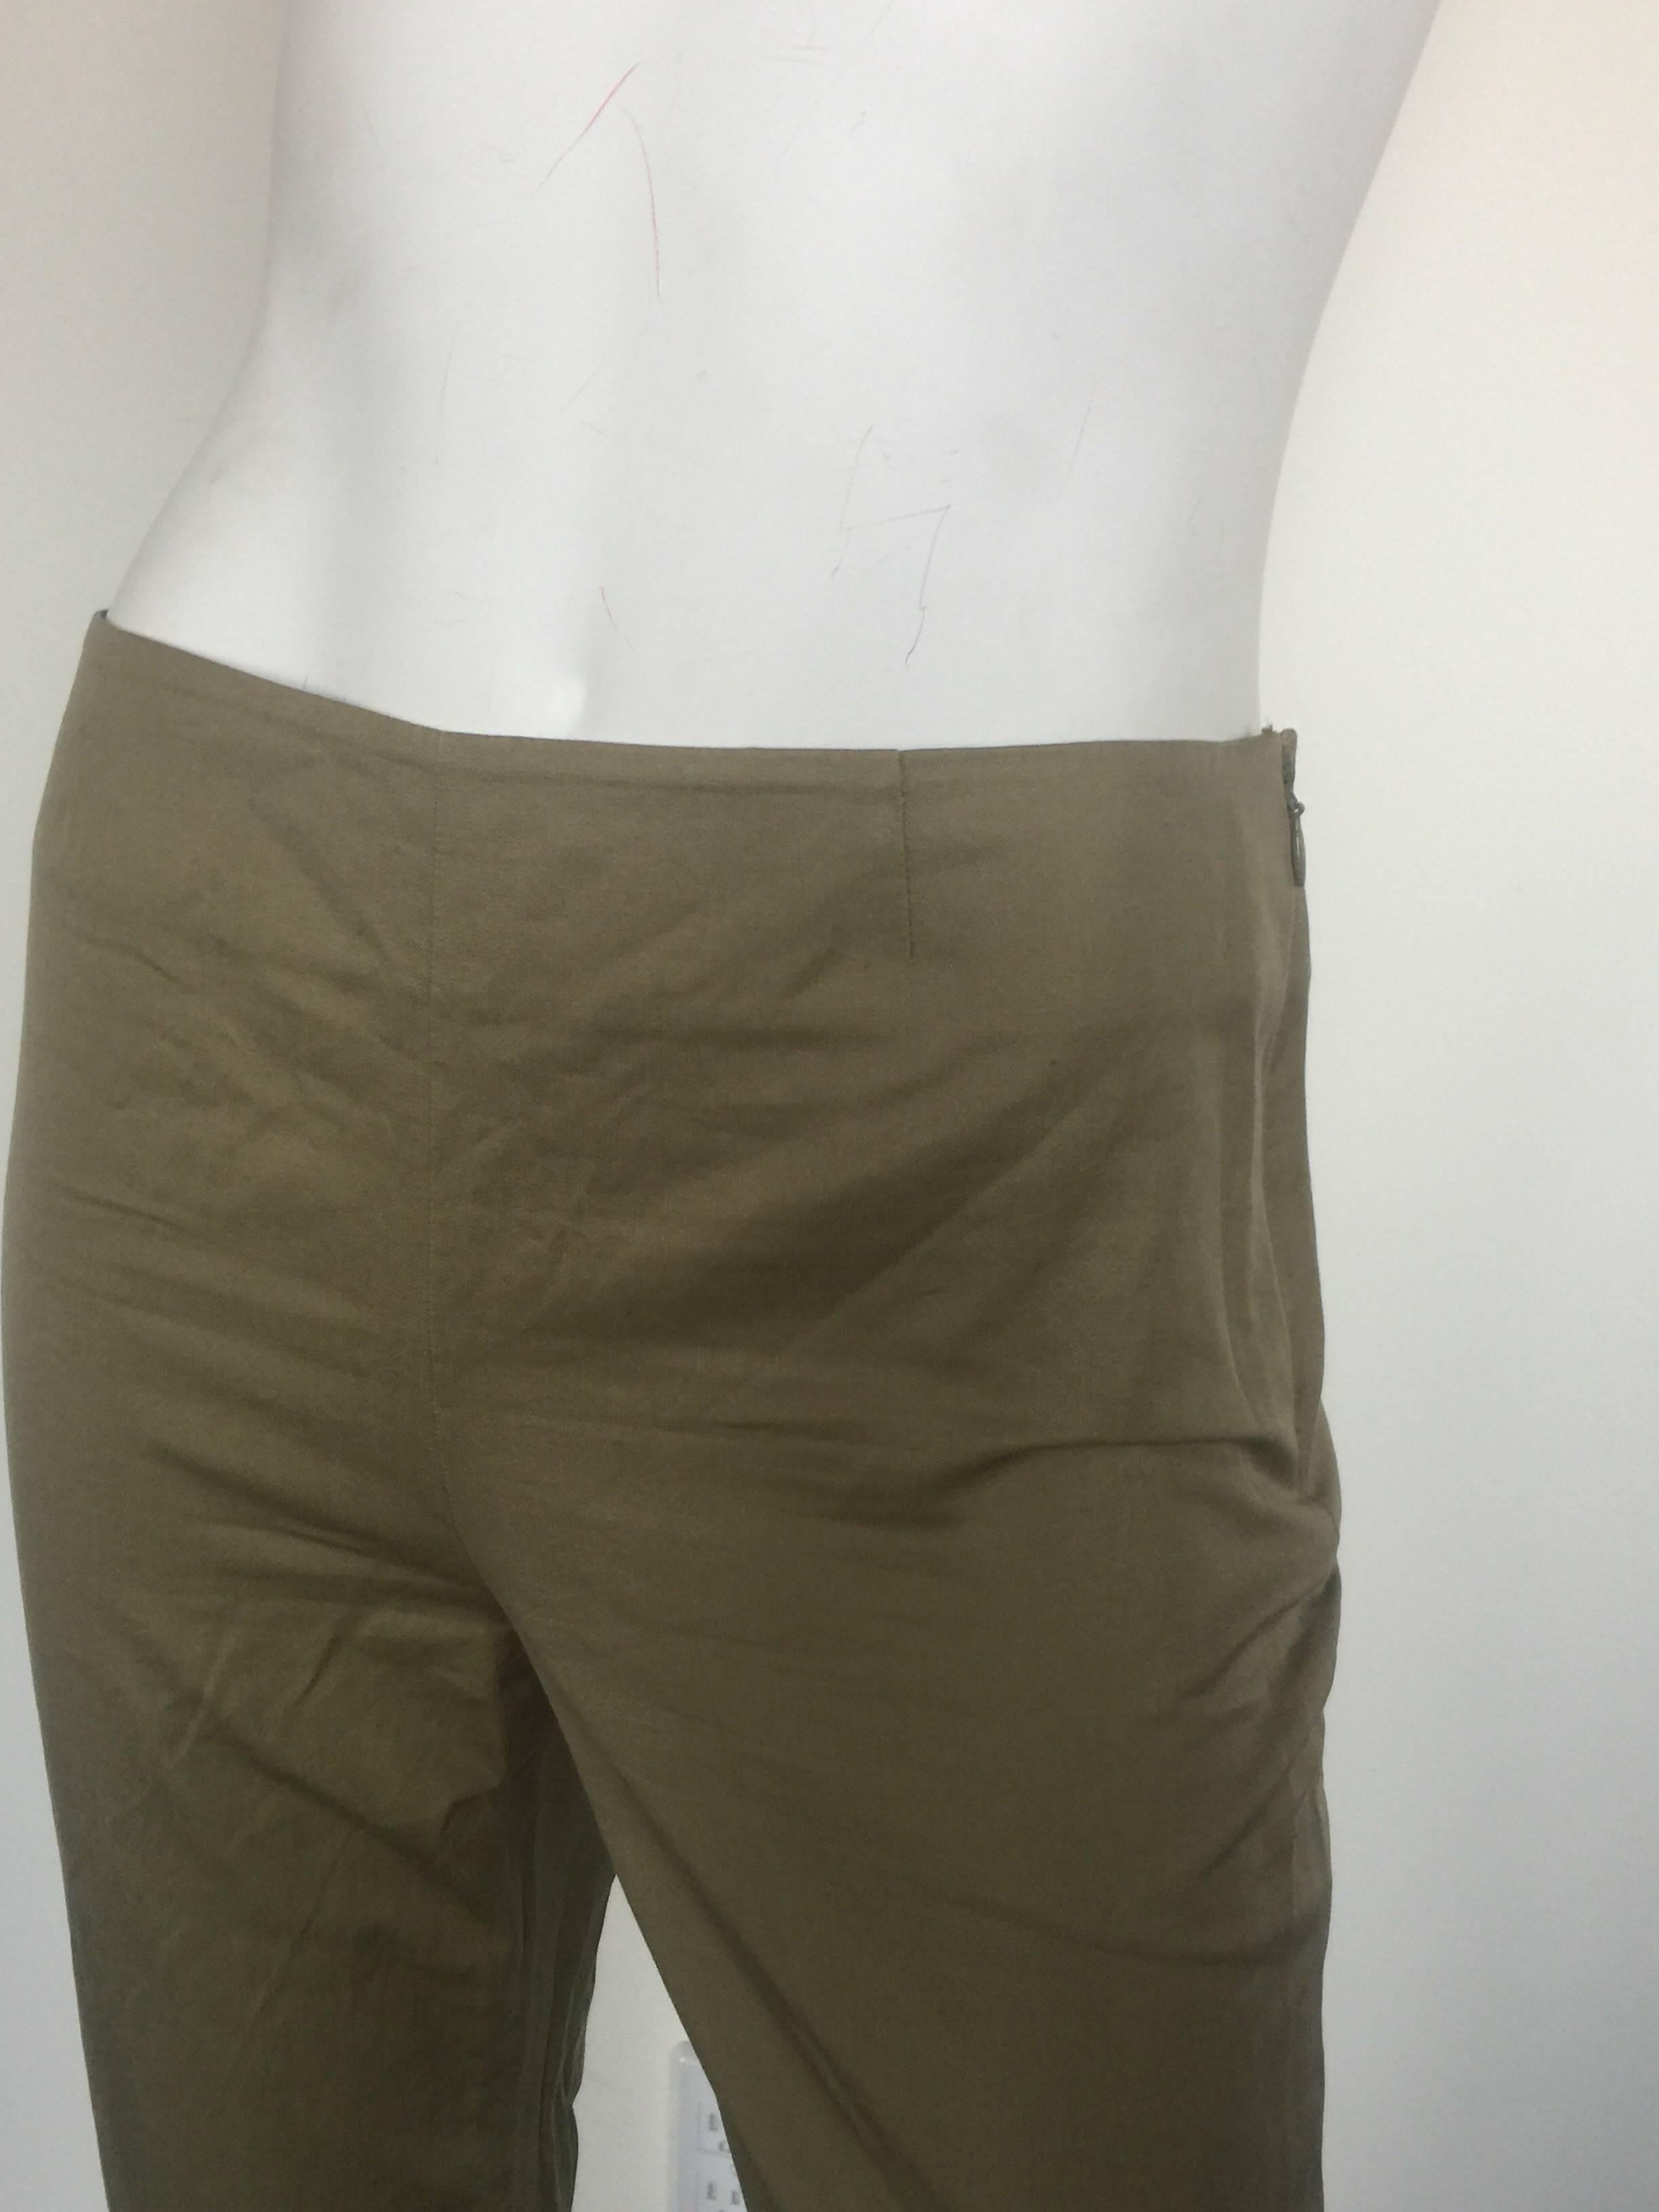 Gray Safari green high waisted pleated bell bottom pants  For Sale